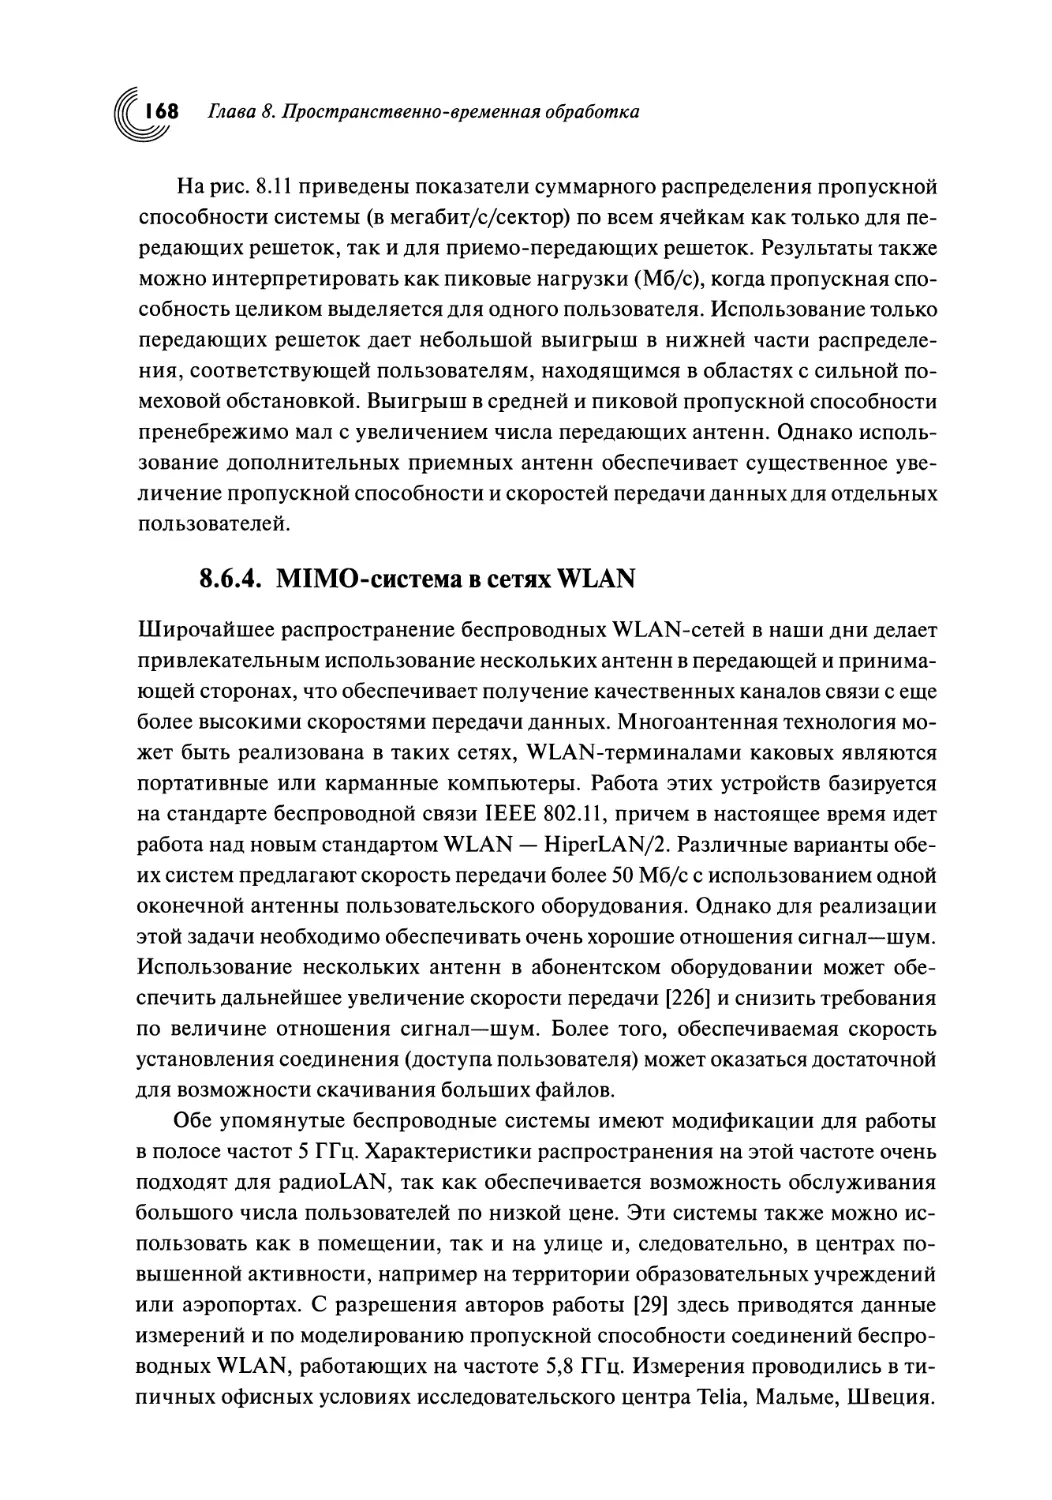 8.6.4. MIMO-система в сетях WLAN